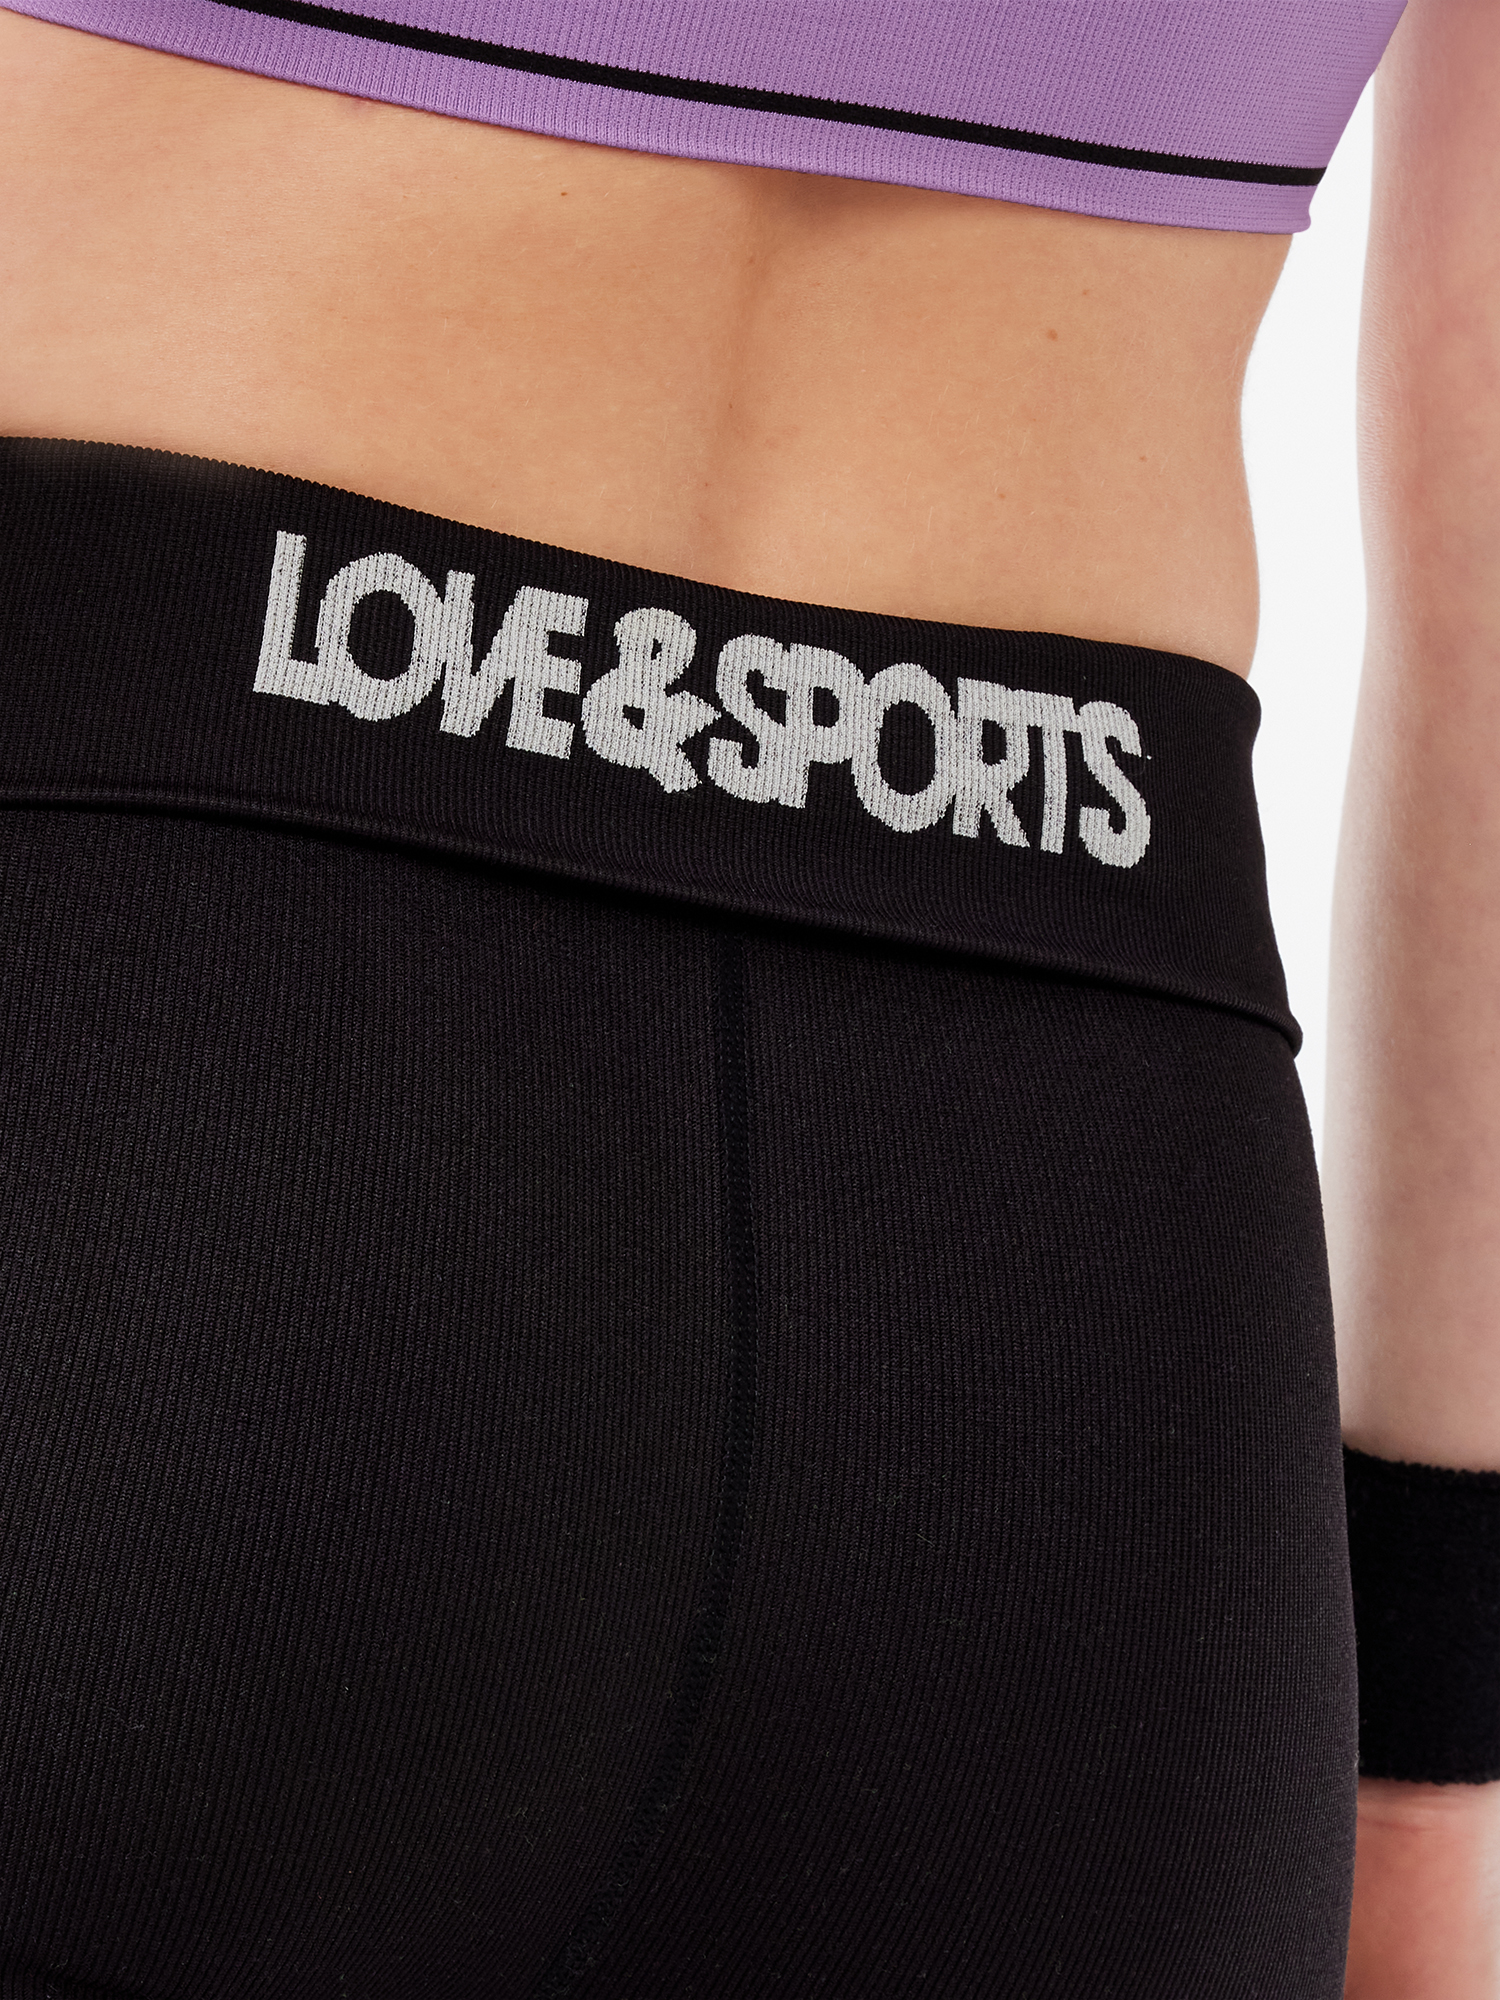 Love & Sports Women's Seamless Bike Shorts - image 5 of 7